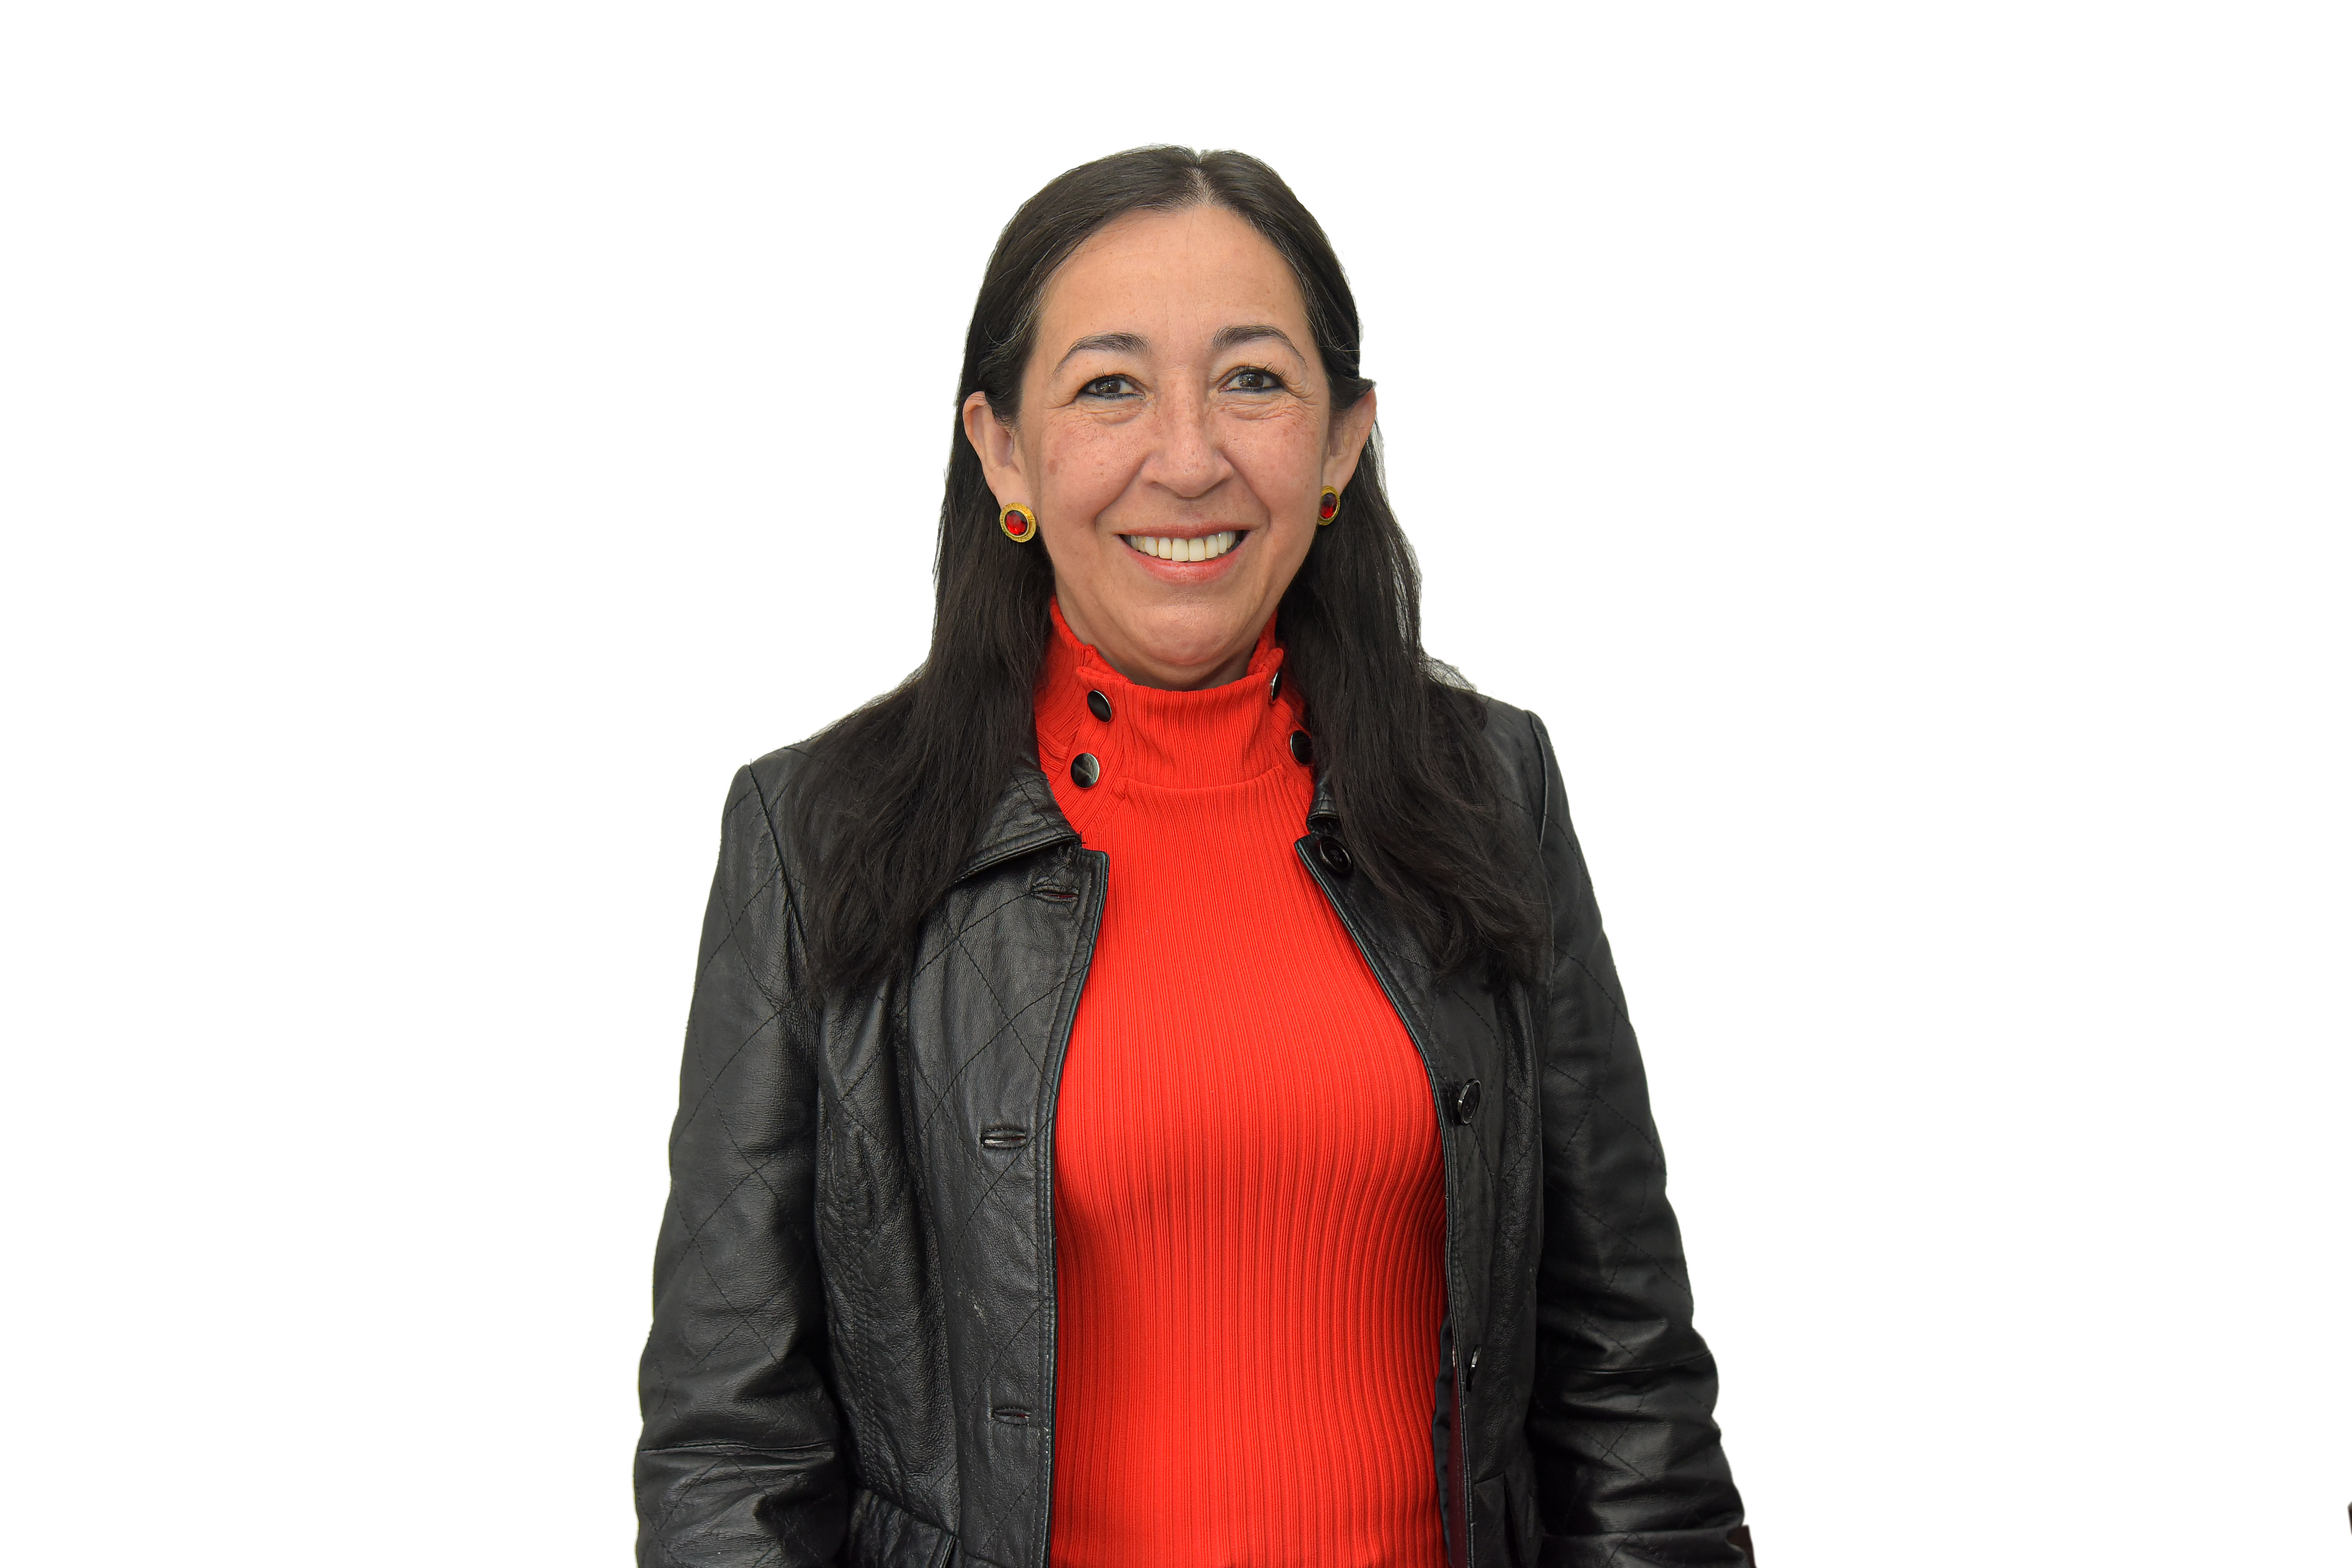 María Monica Martínez Martínez